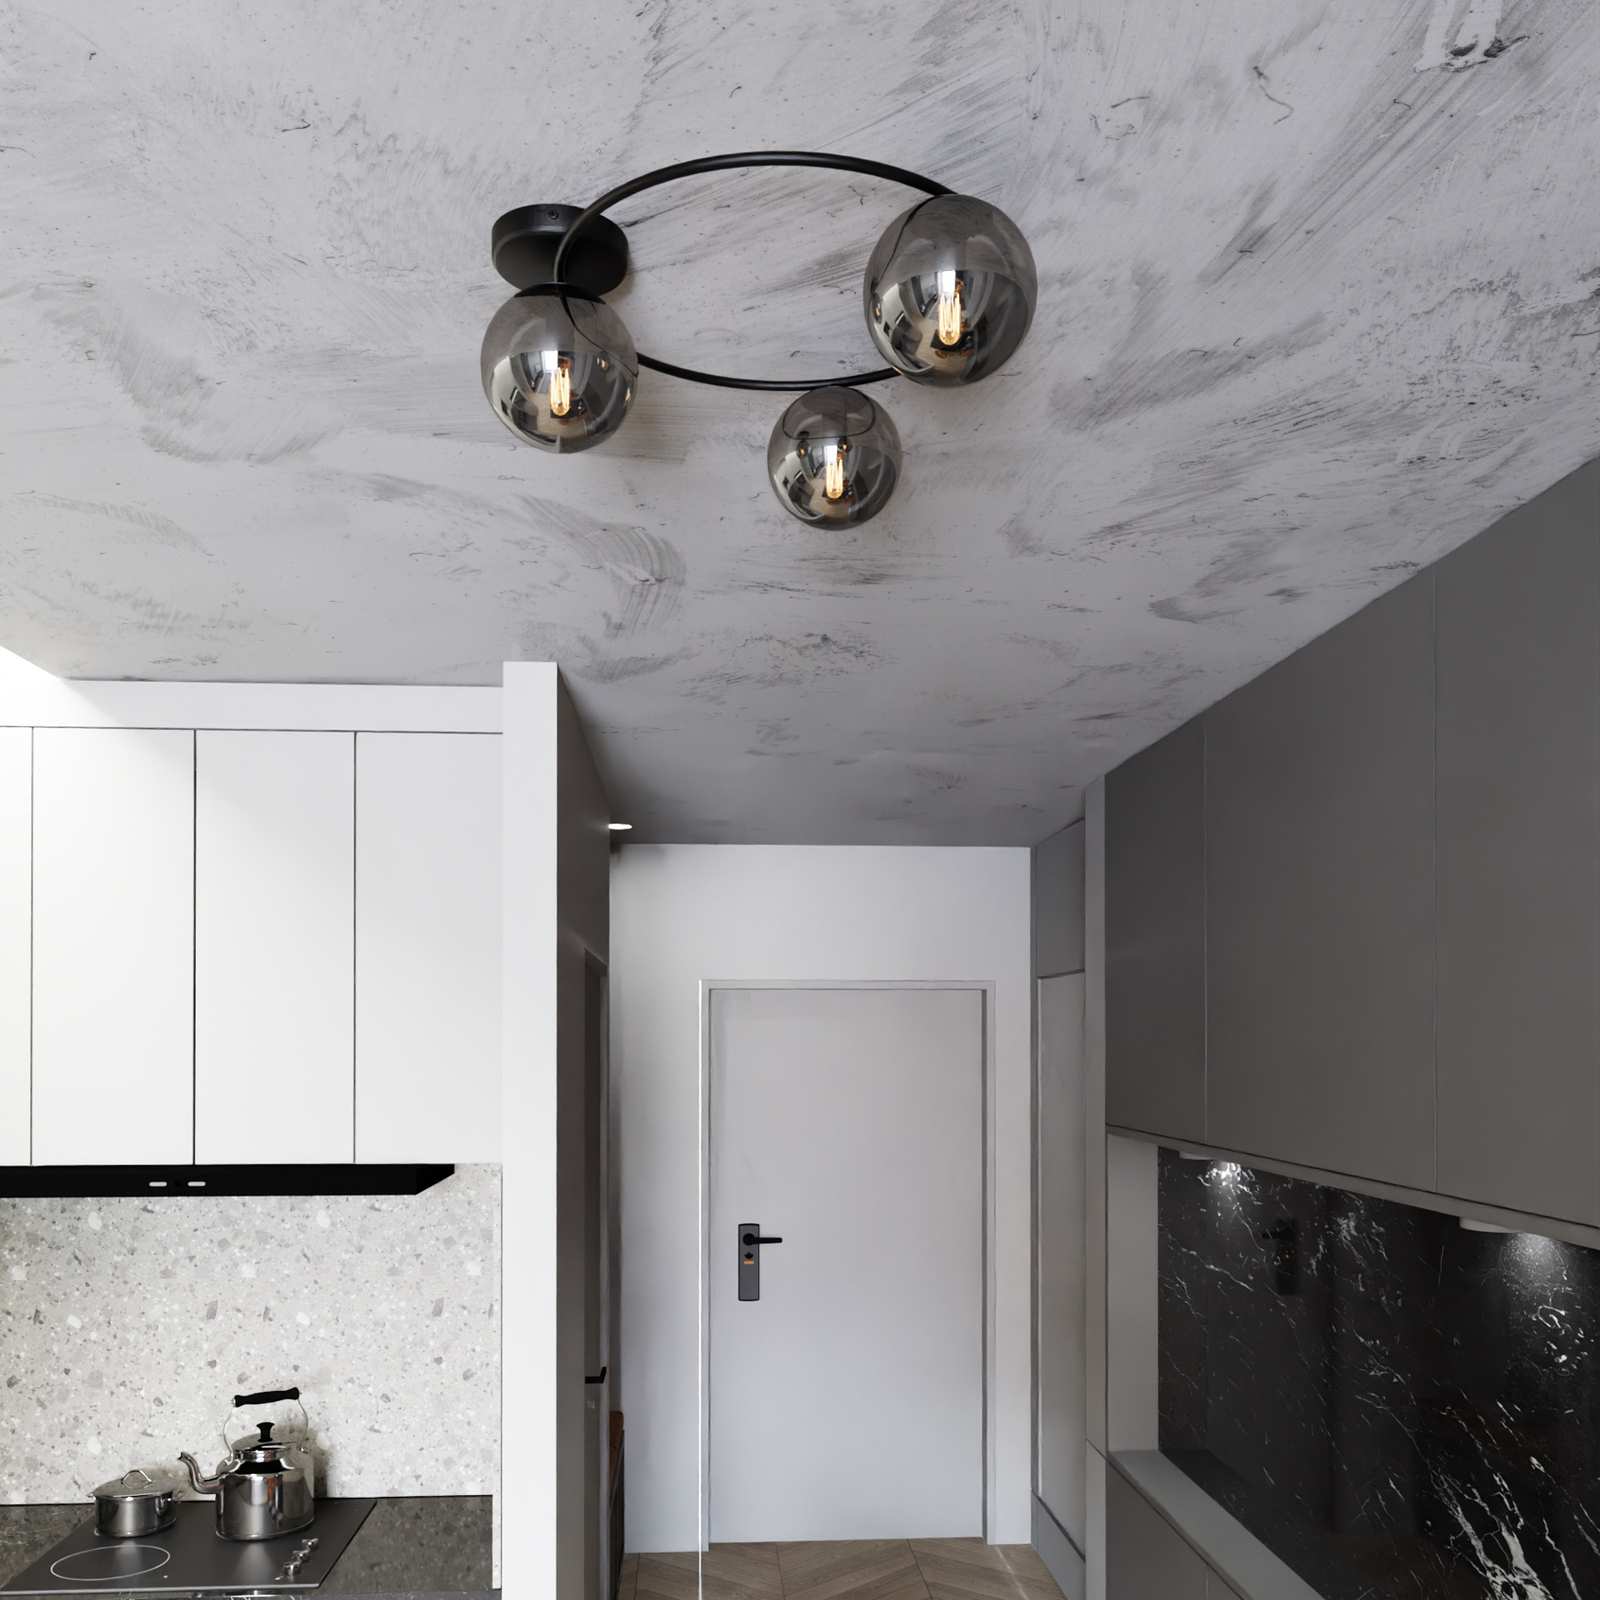 Ascella ceiling light, 3-bulb, black/graphite